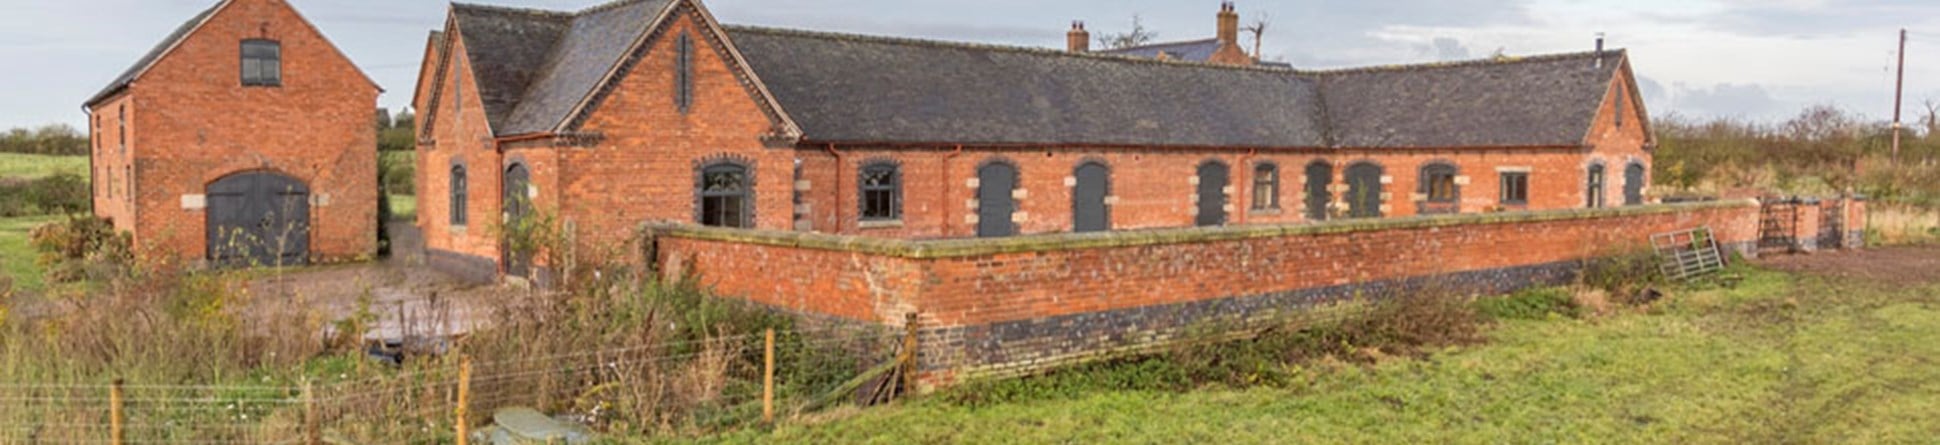 North Shropshire red brick farmstead shippon conversion.